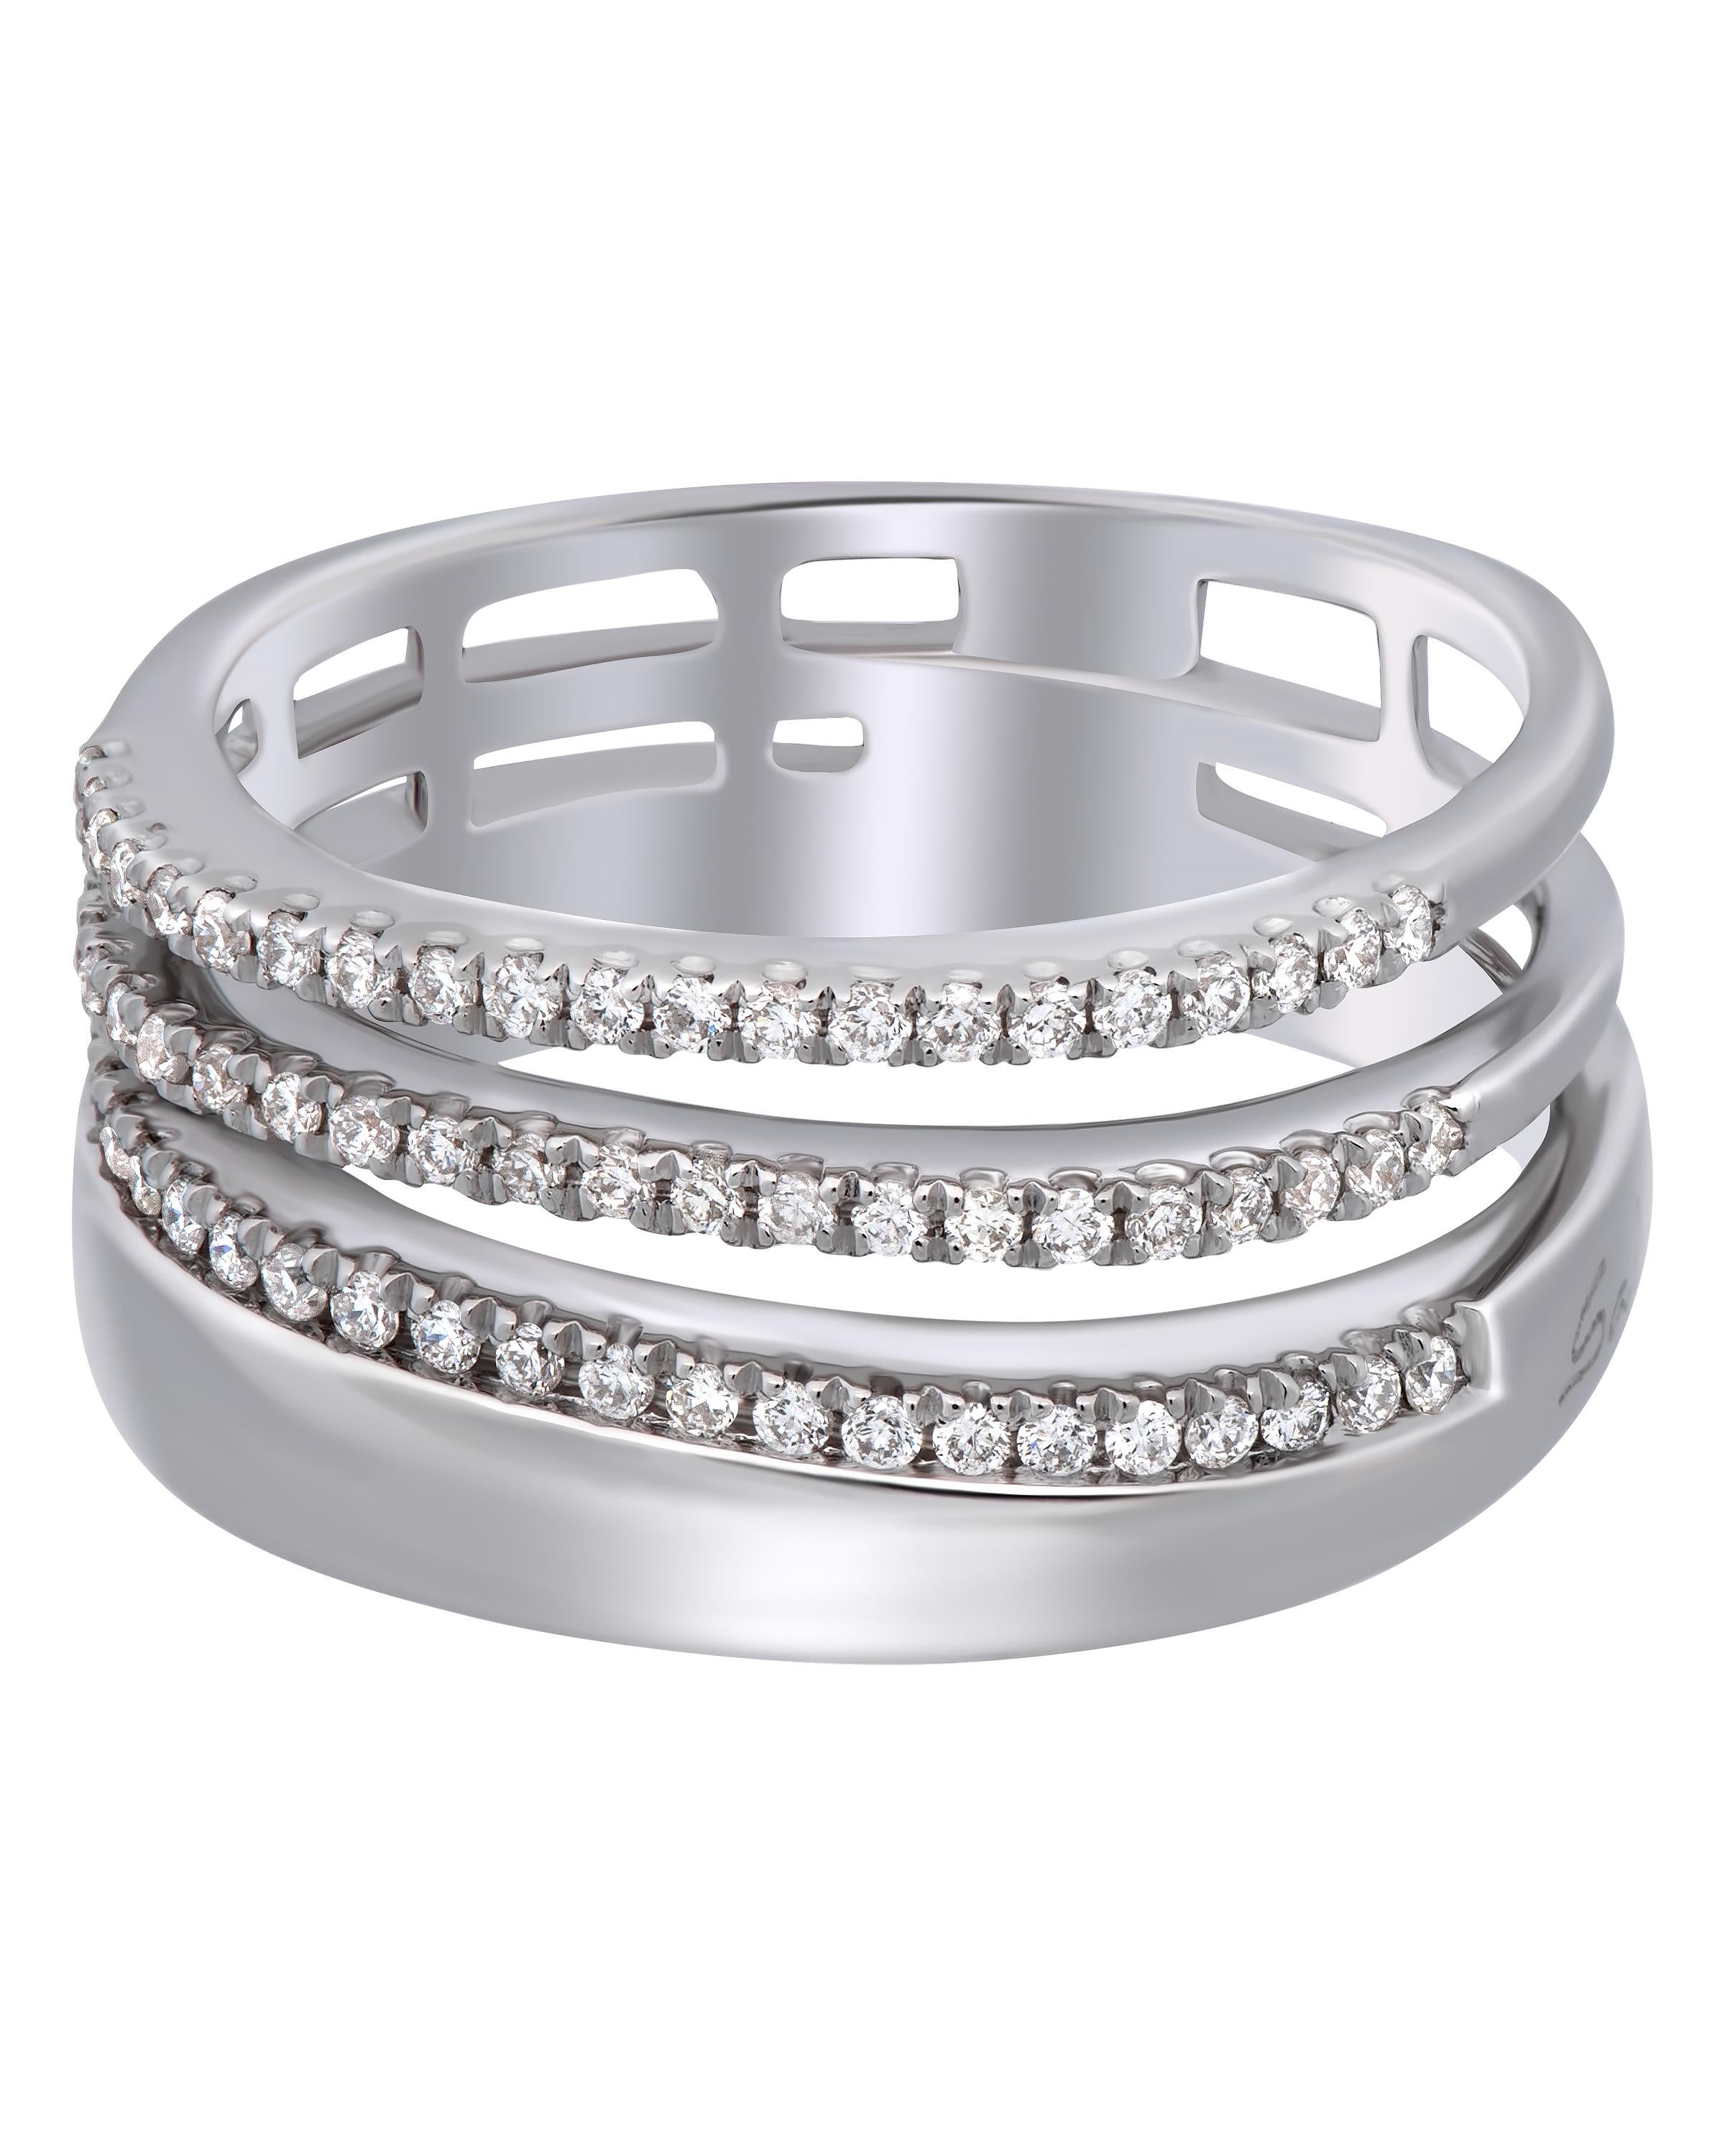 SALVINI 18K White Gold Diamond Band Ring sz 6.5 For Sale